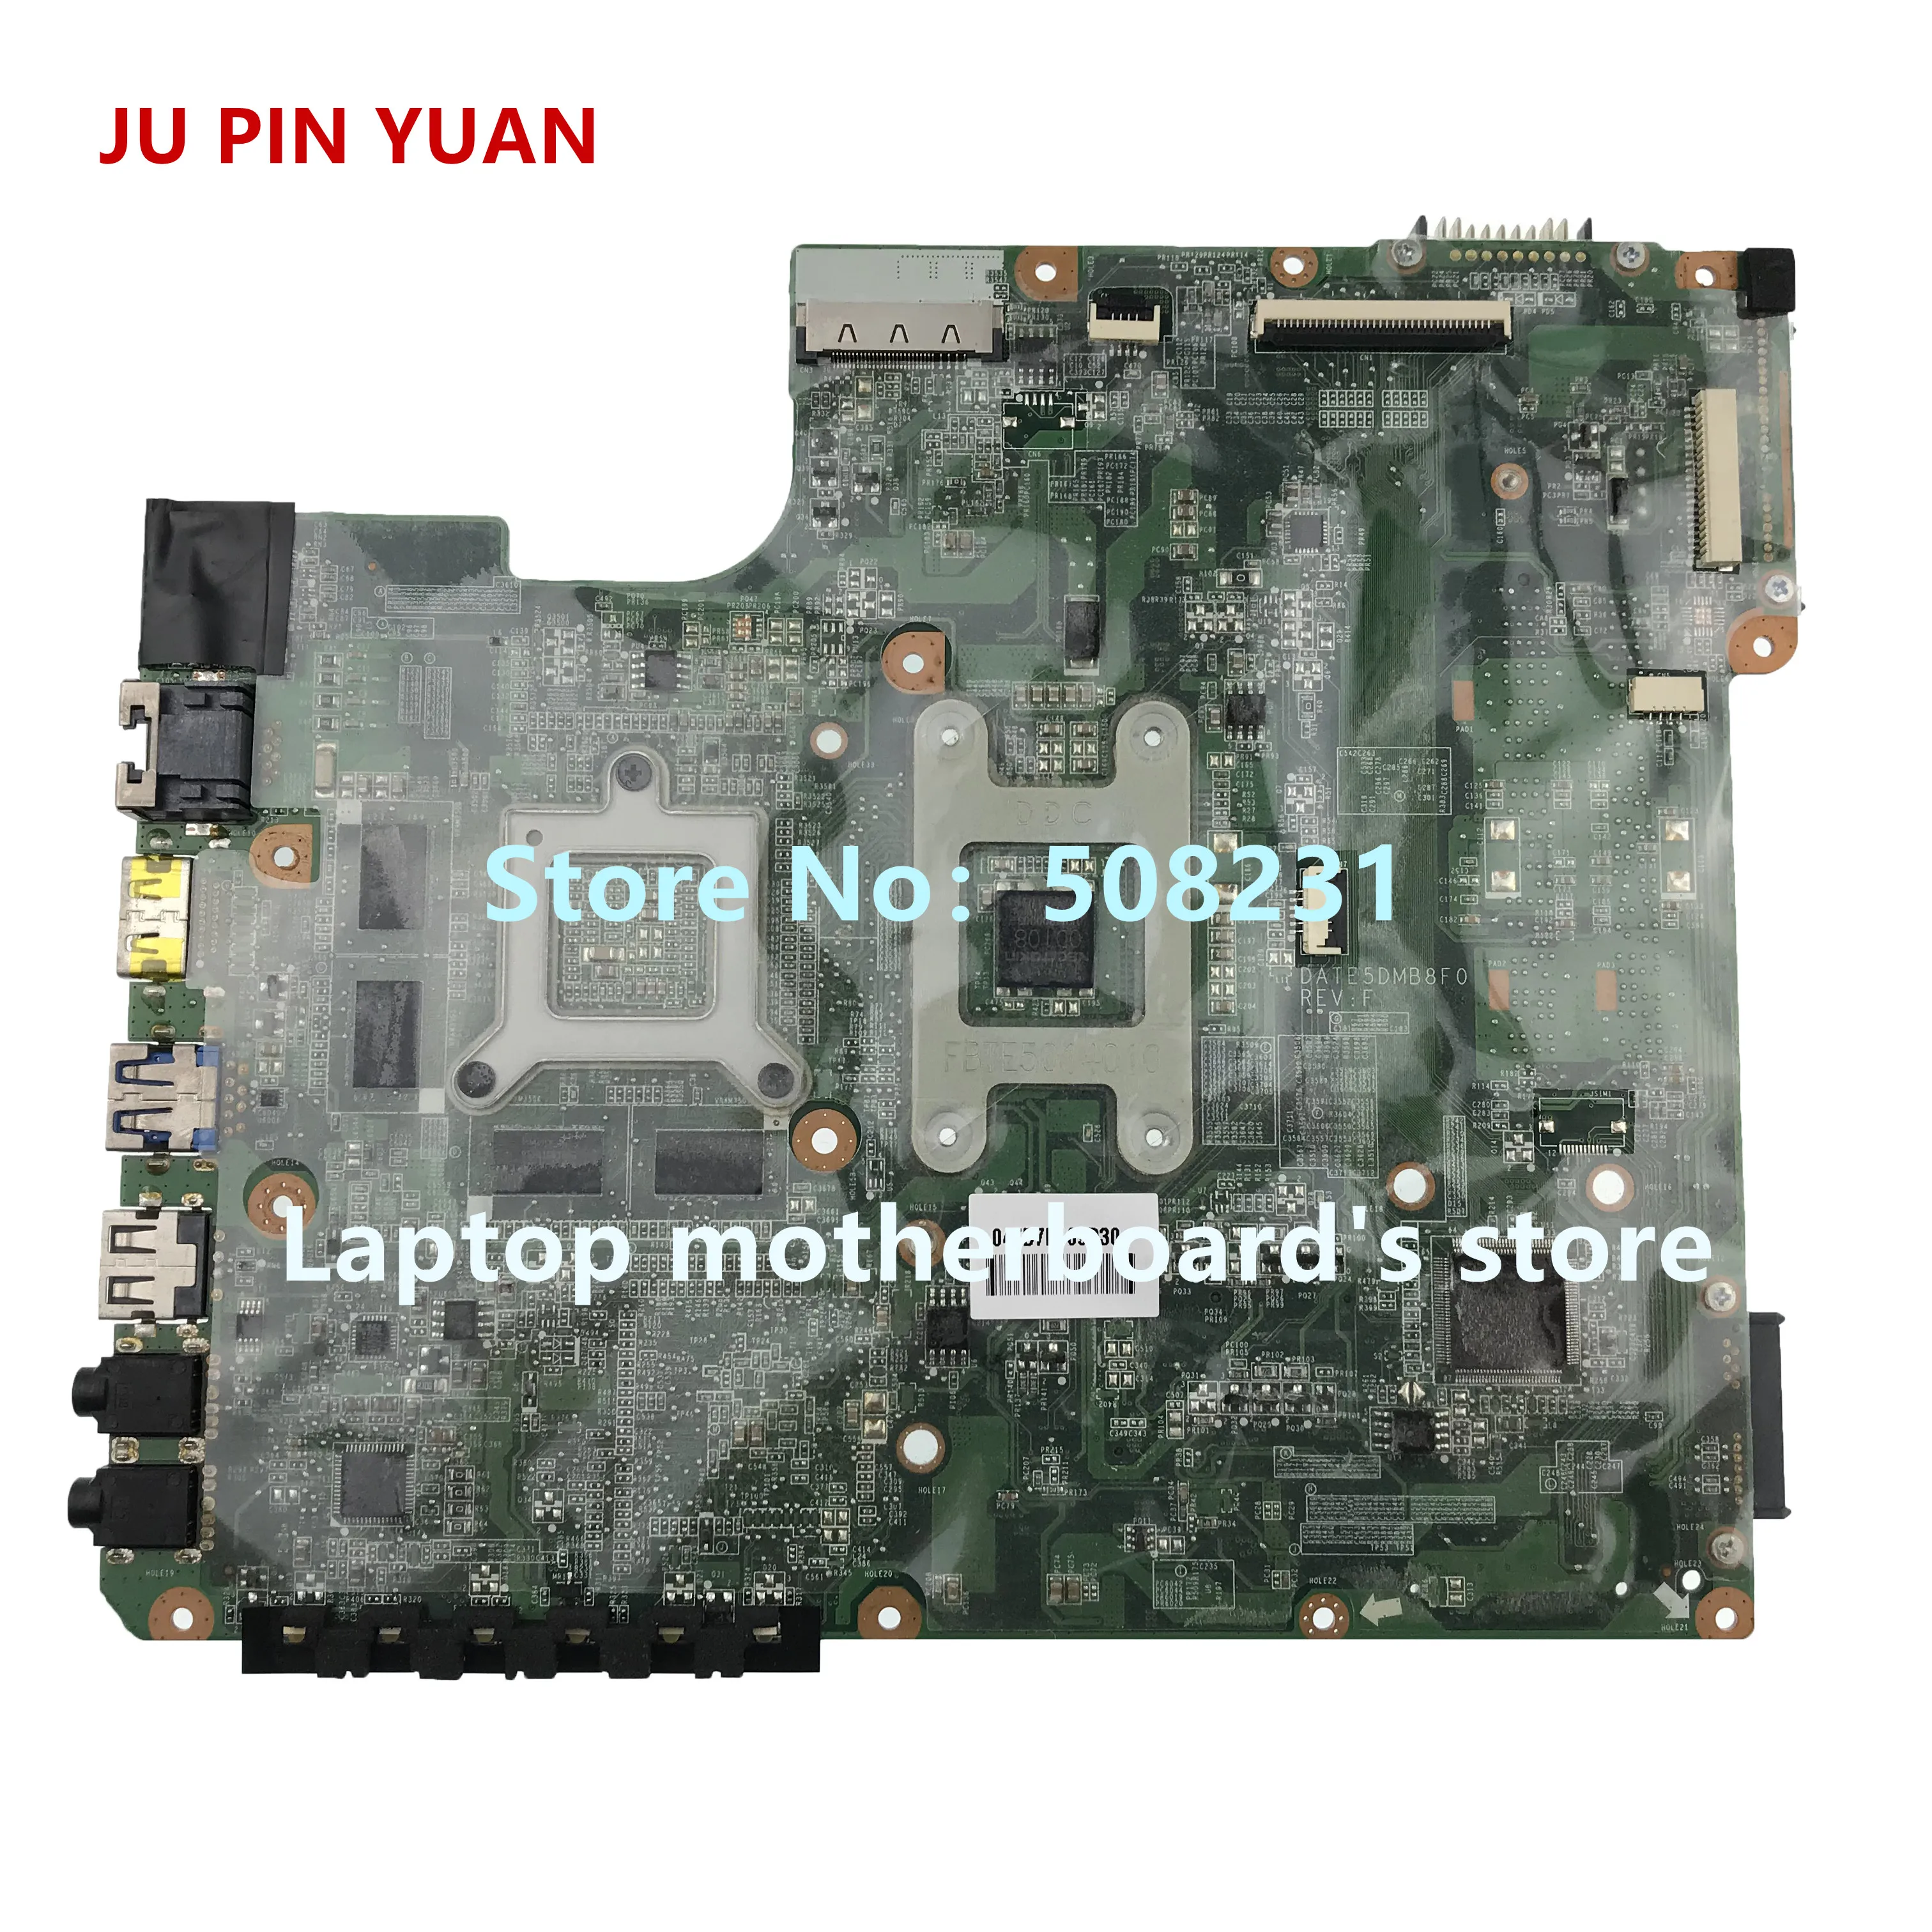 JU PIN de YUANI A000074700 DATE5DMB8F0 Pentru toshiba satellite L700 L740 L745 laptop placa de baza GT525M 1GB Testat pe deplin